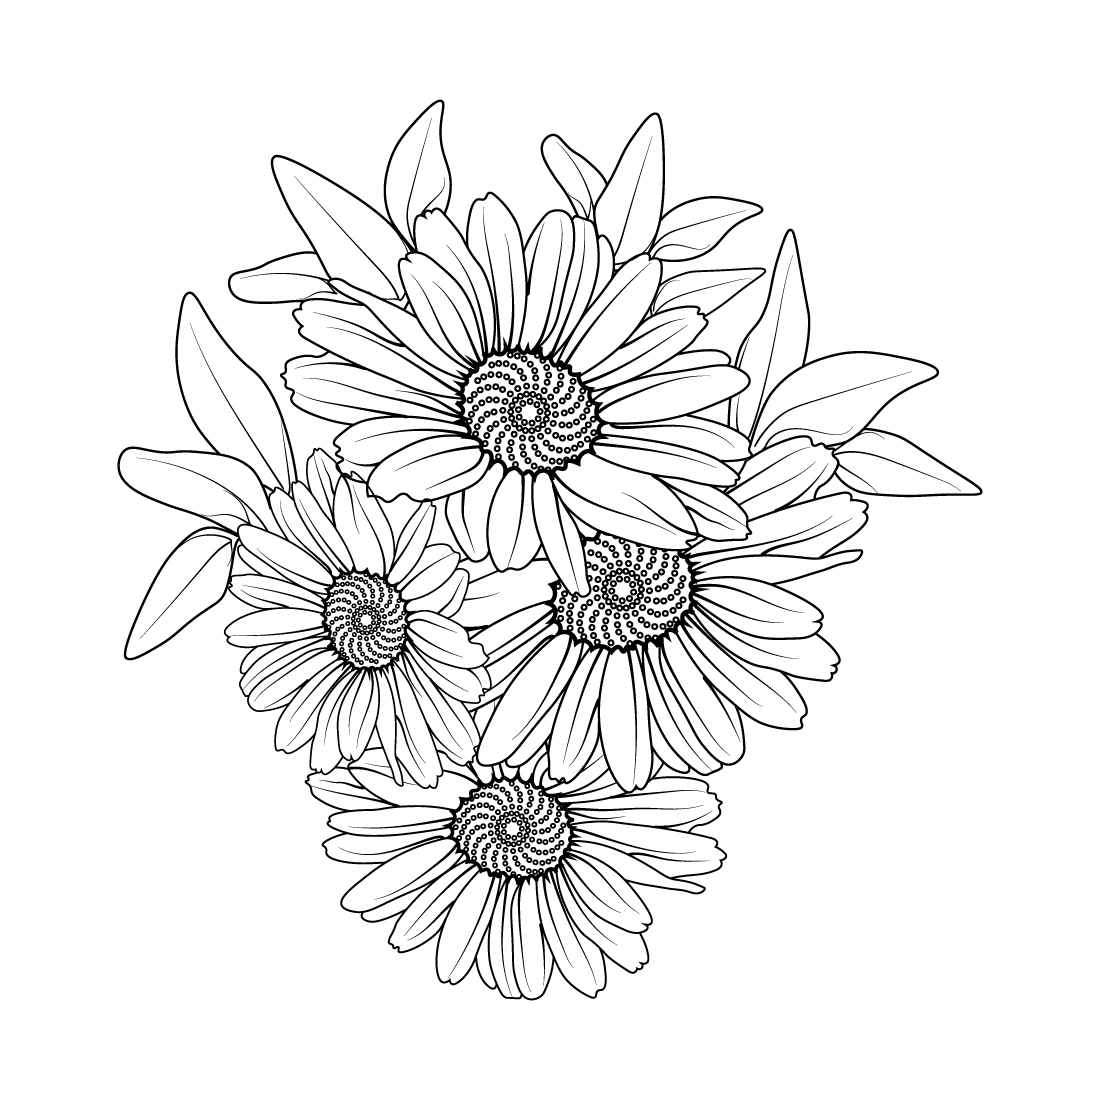 Daisy flwoer line art, daisy floewr line art bouquet, gerbara daisy drawing cover image.